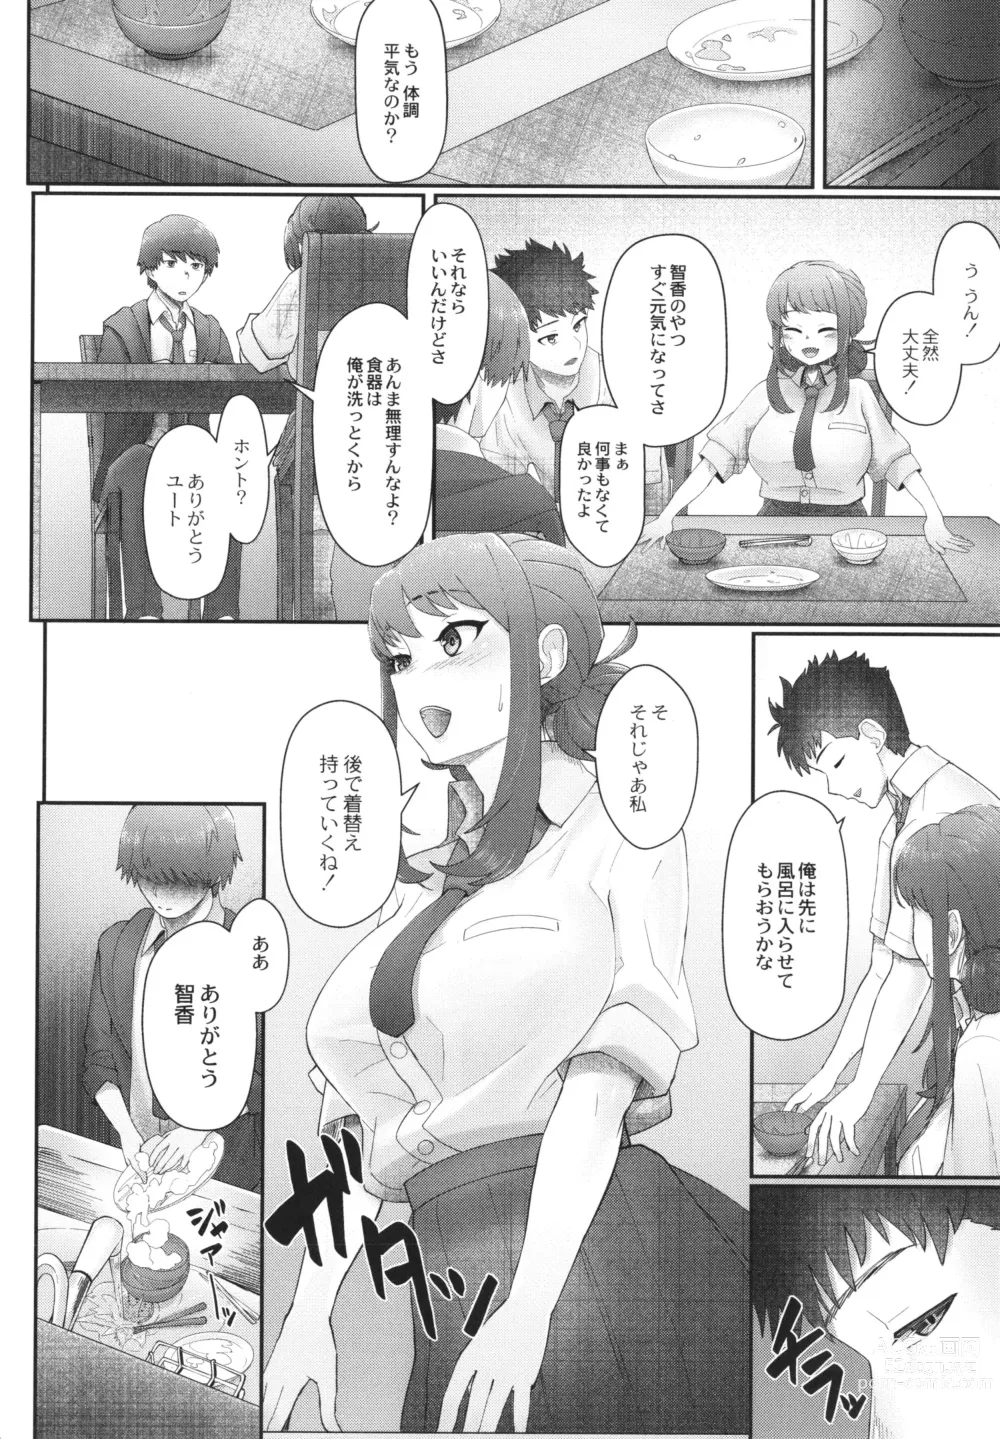 Page 13 of manga Kakuregoto